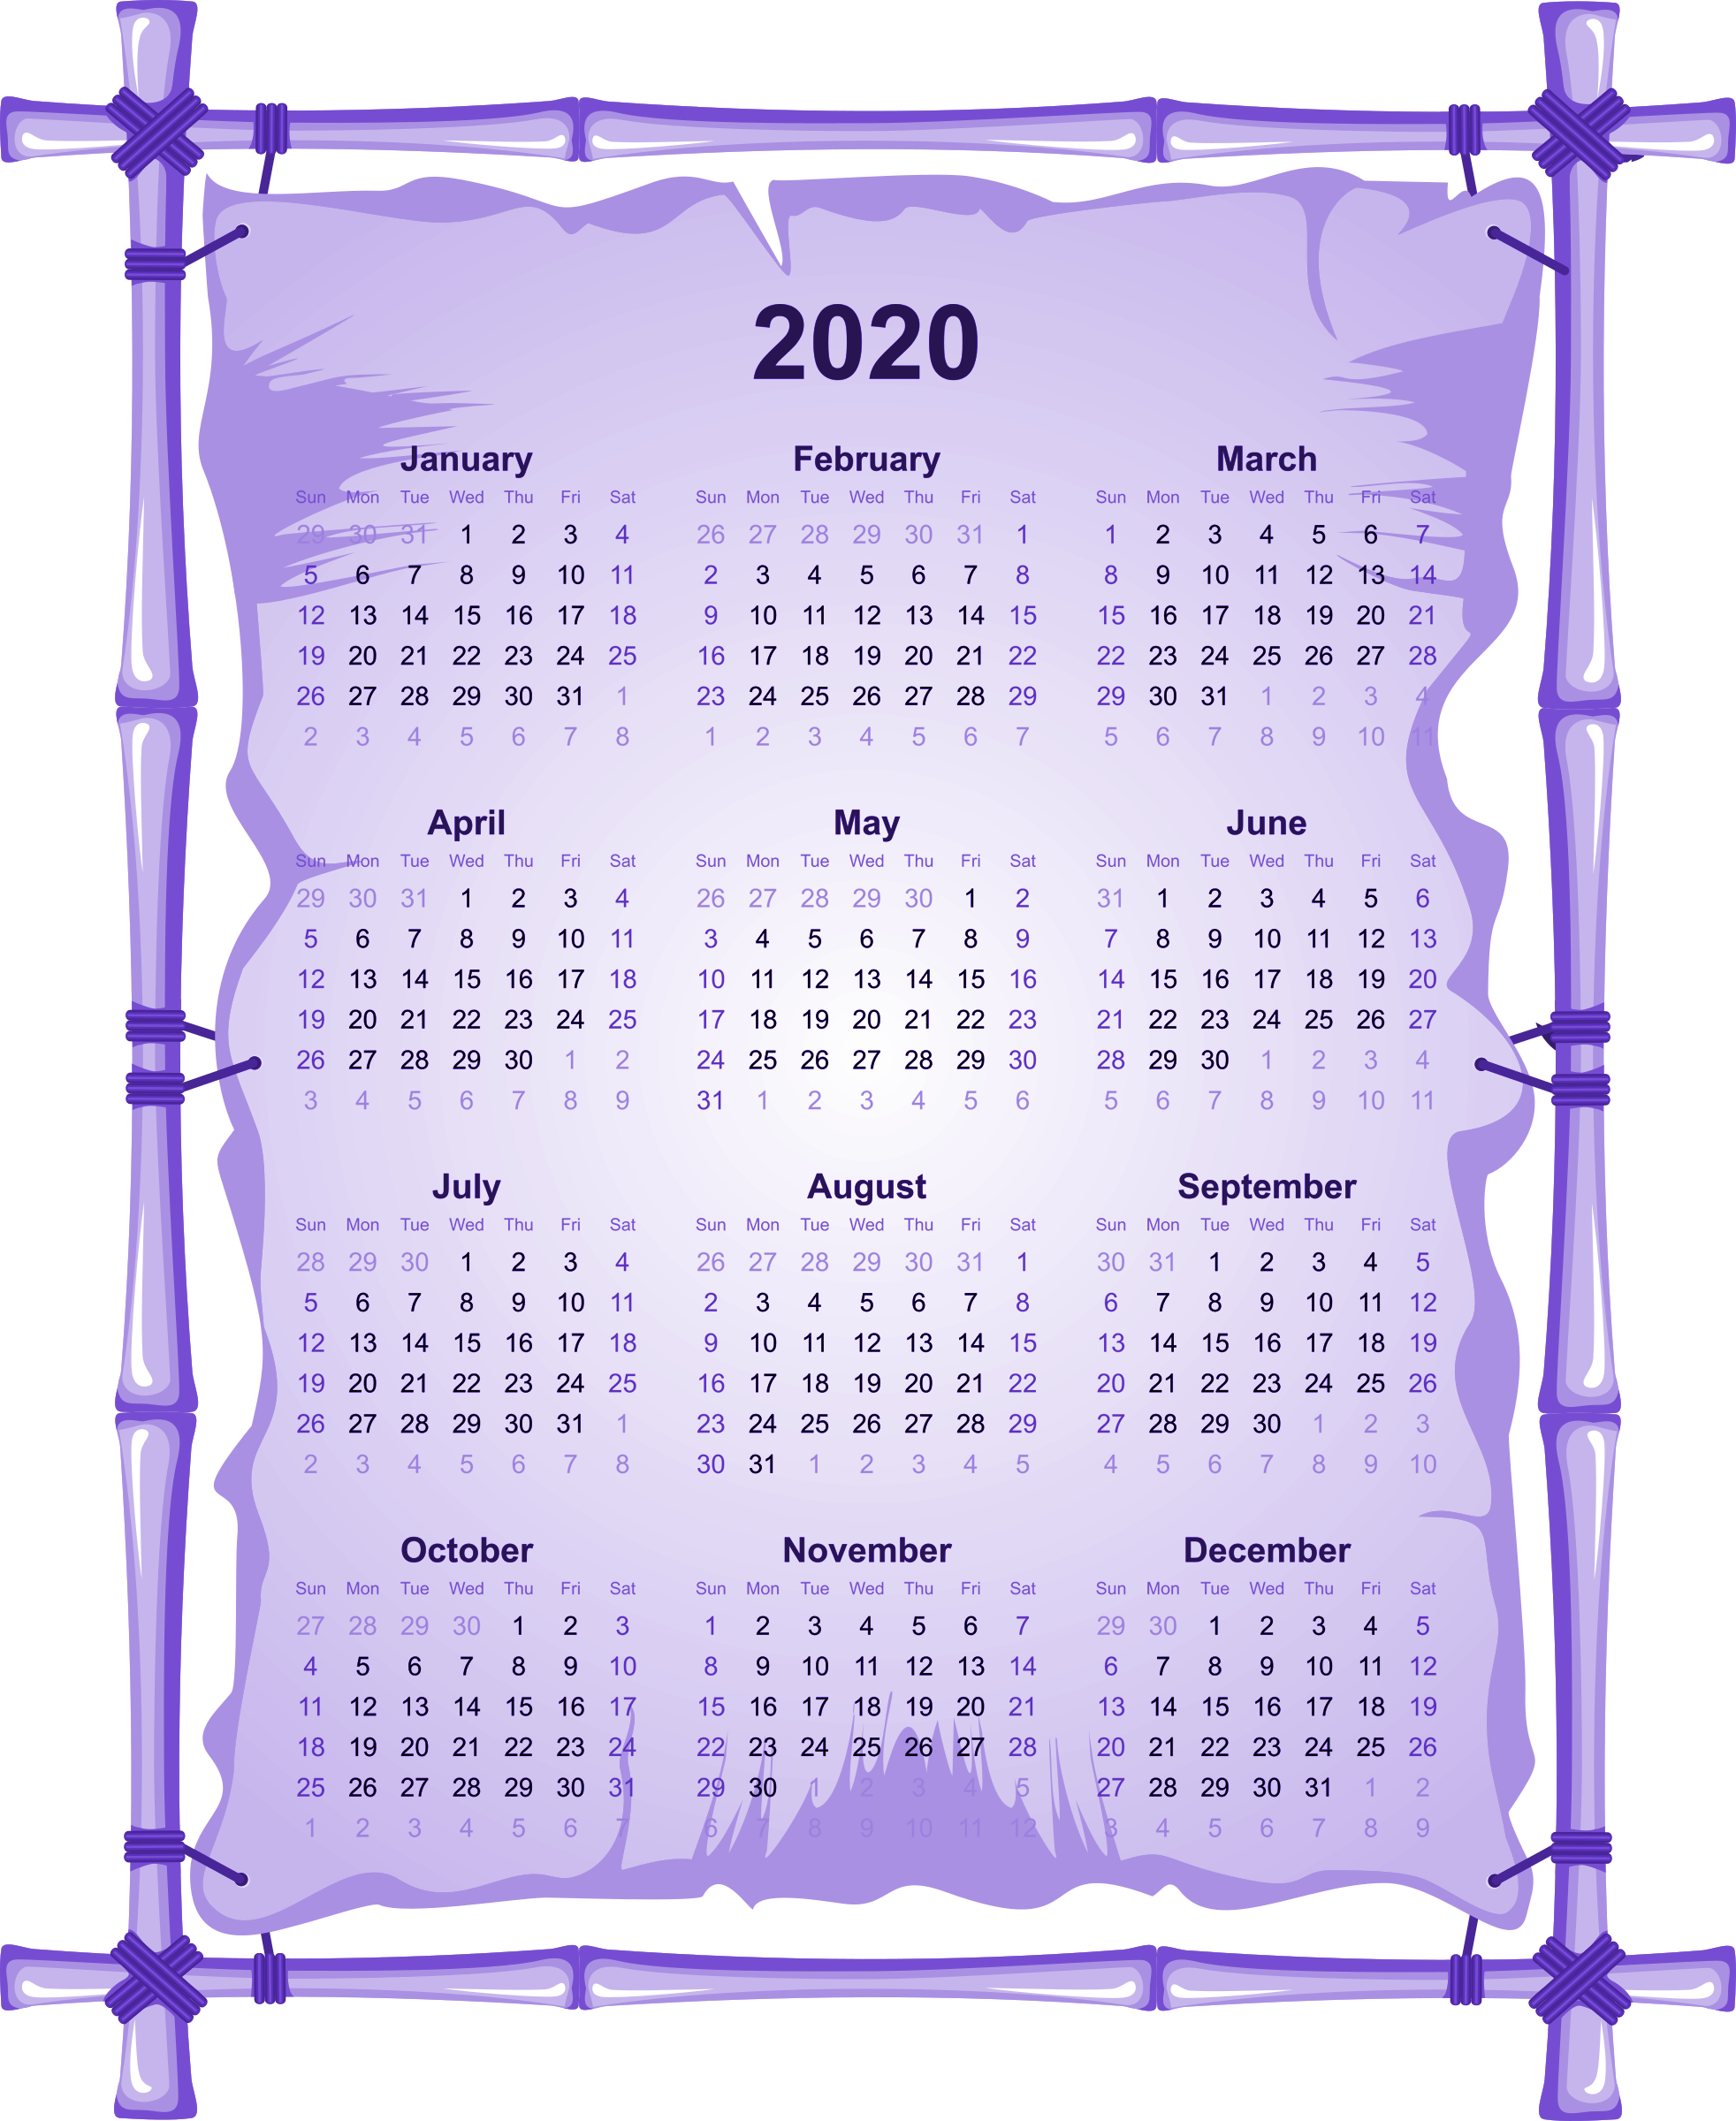 2020 Calendar PNG Image HD